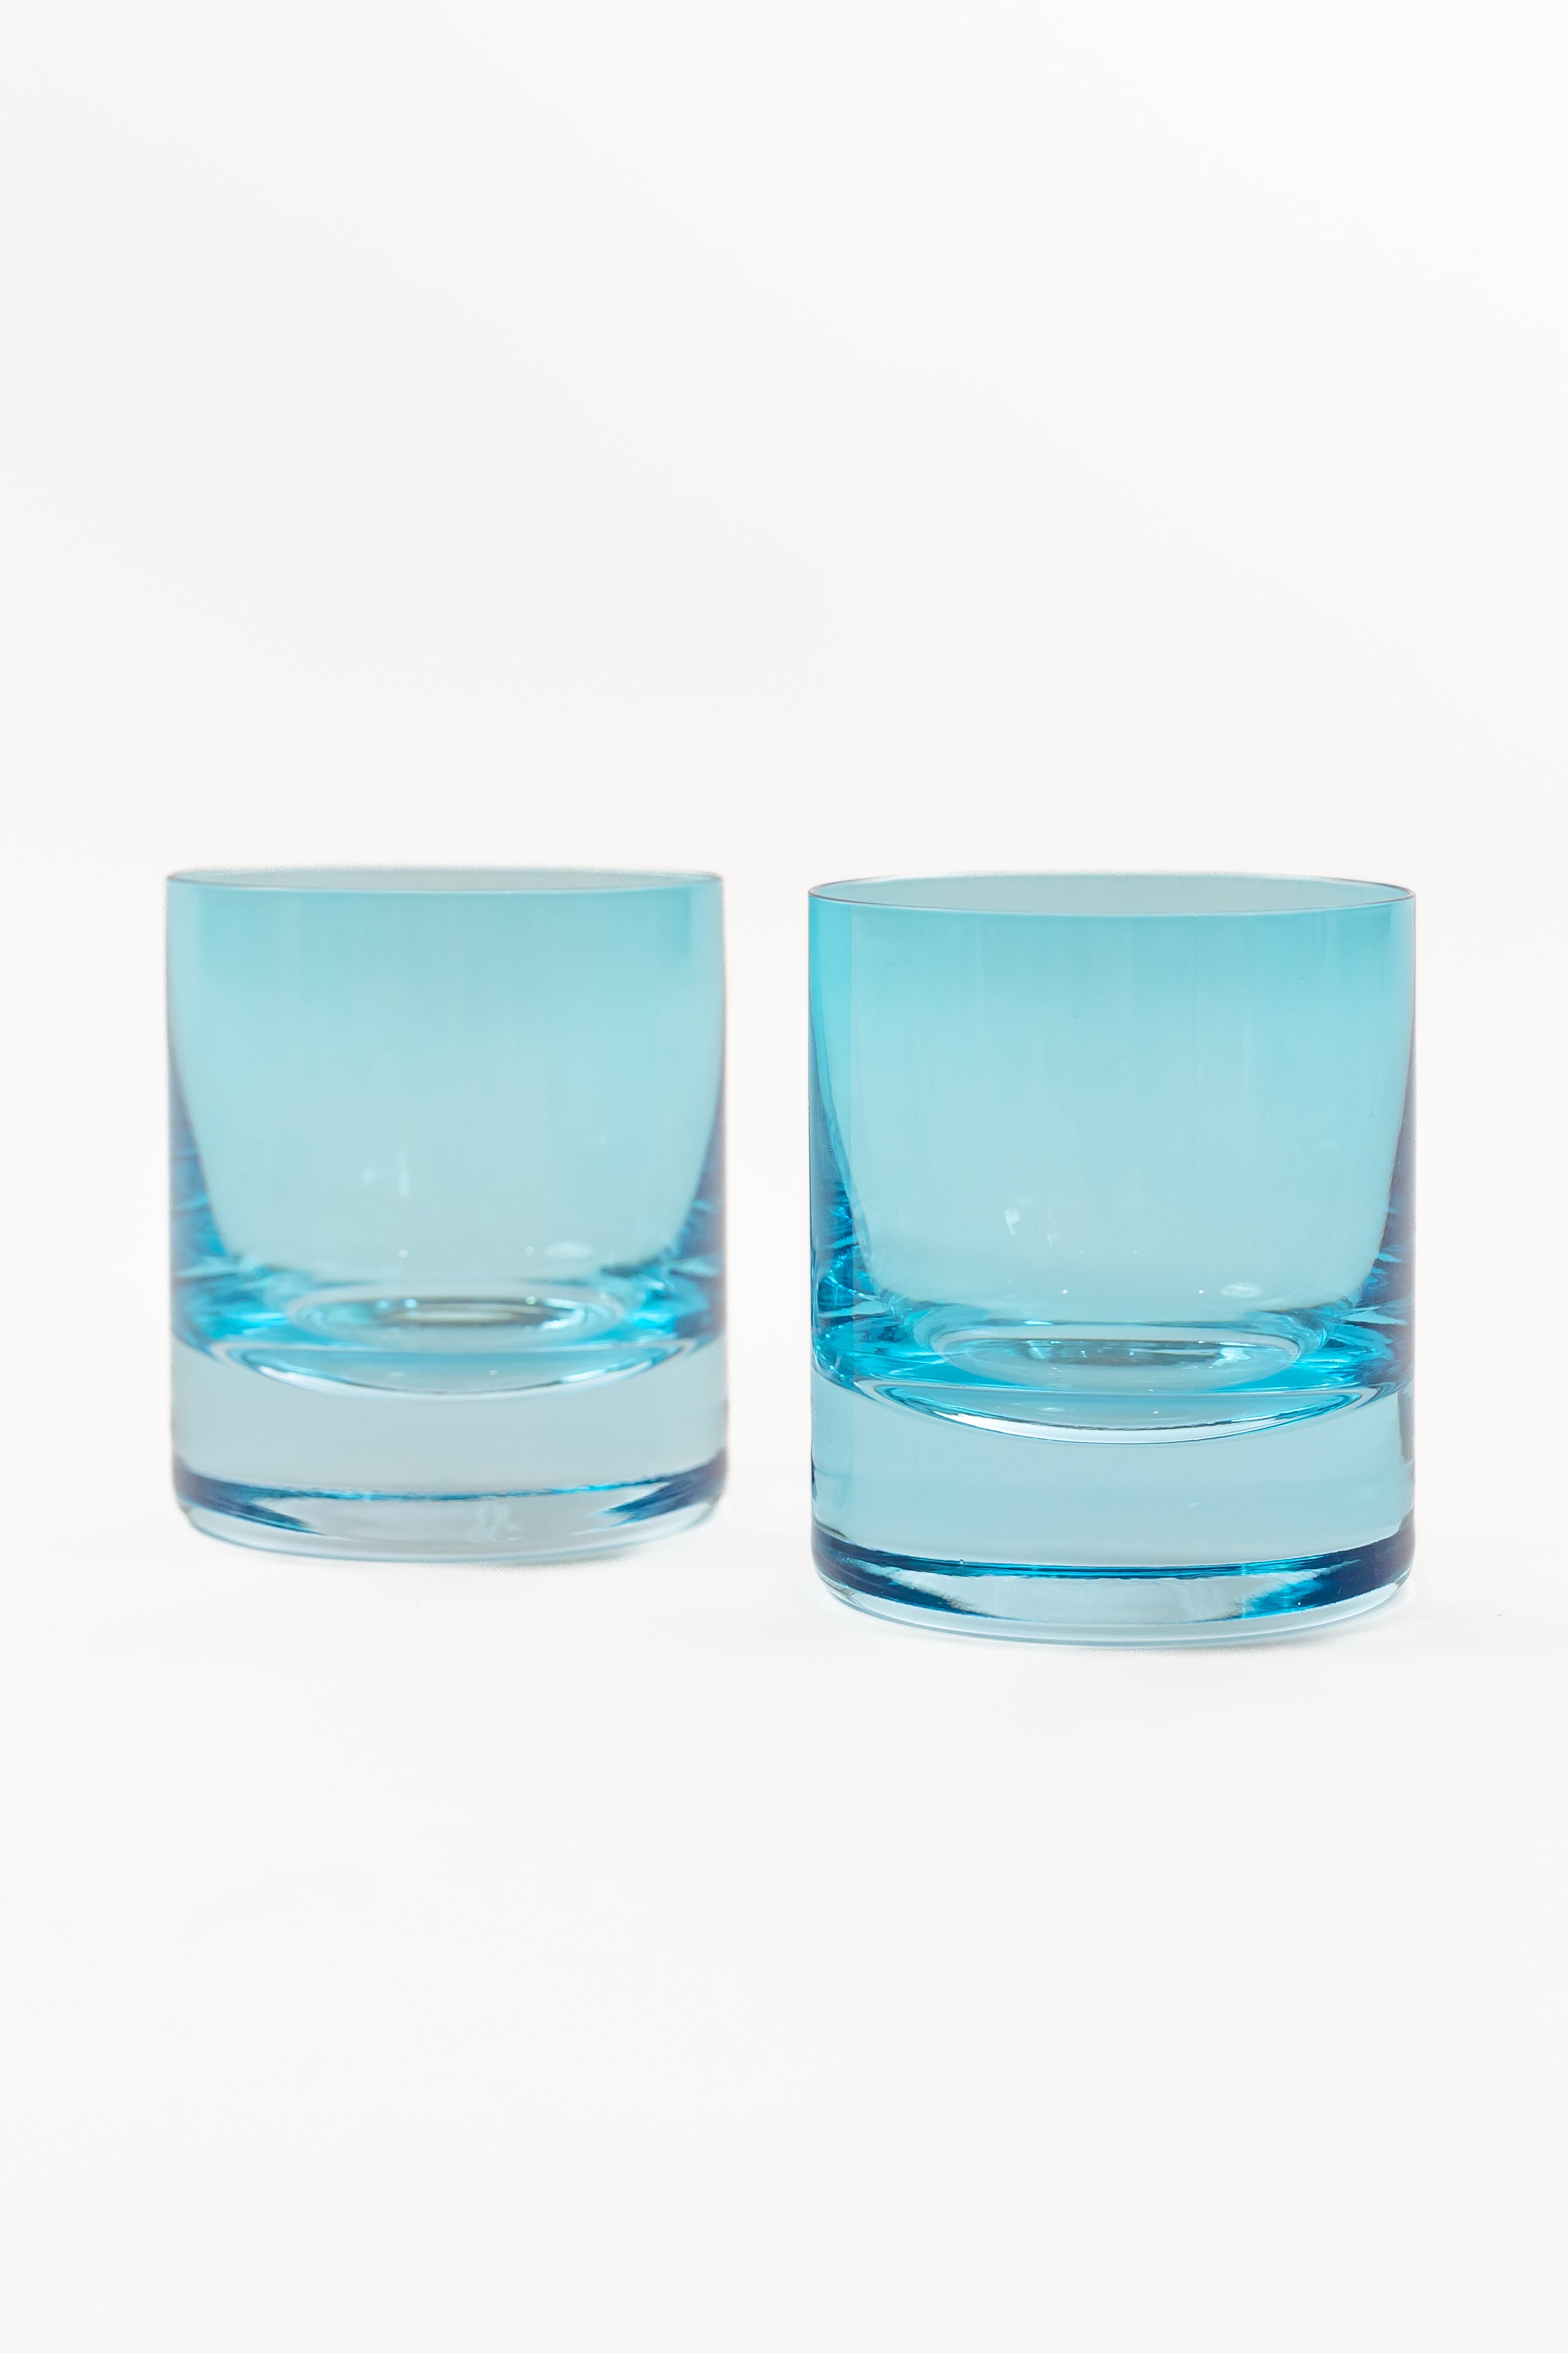 IMPULSE! Melrose Rock Glass, Blue, Set of 6